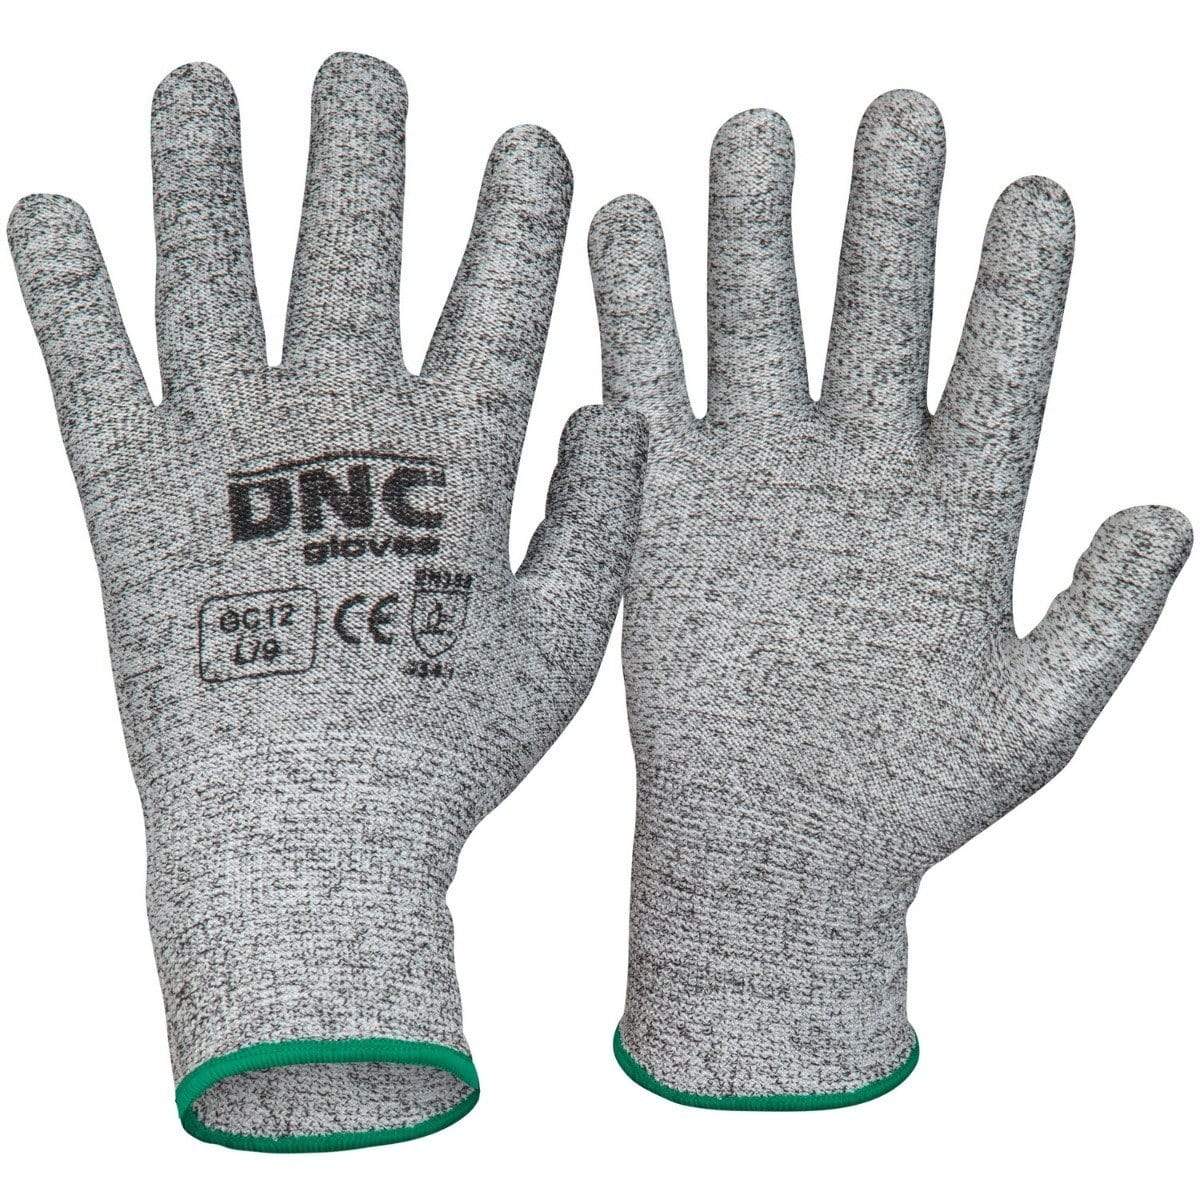 Dnc Workwear Cut5 Liner - GC12 PPE DNC Workwear Grey M/8 